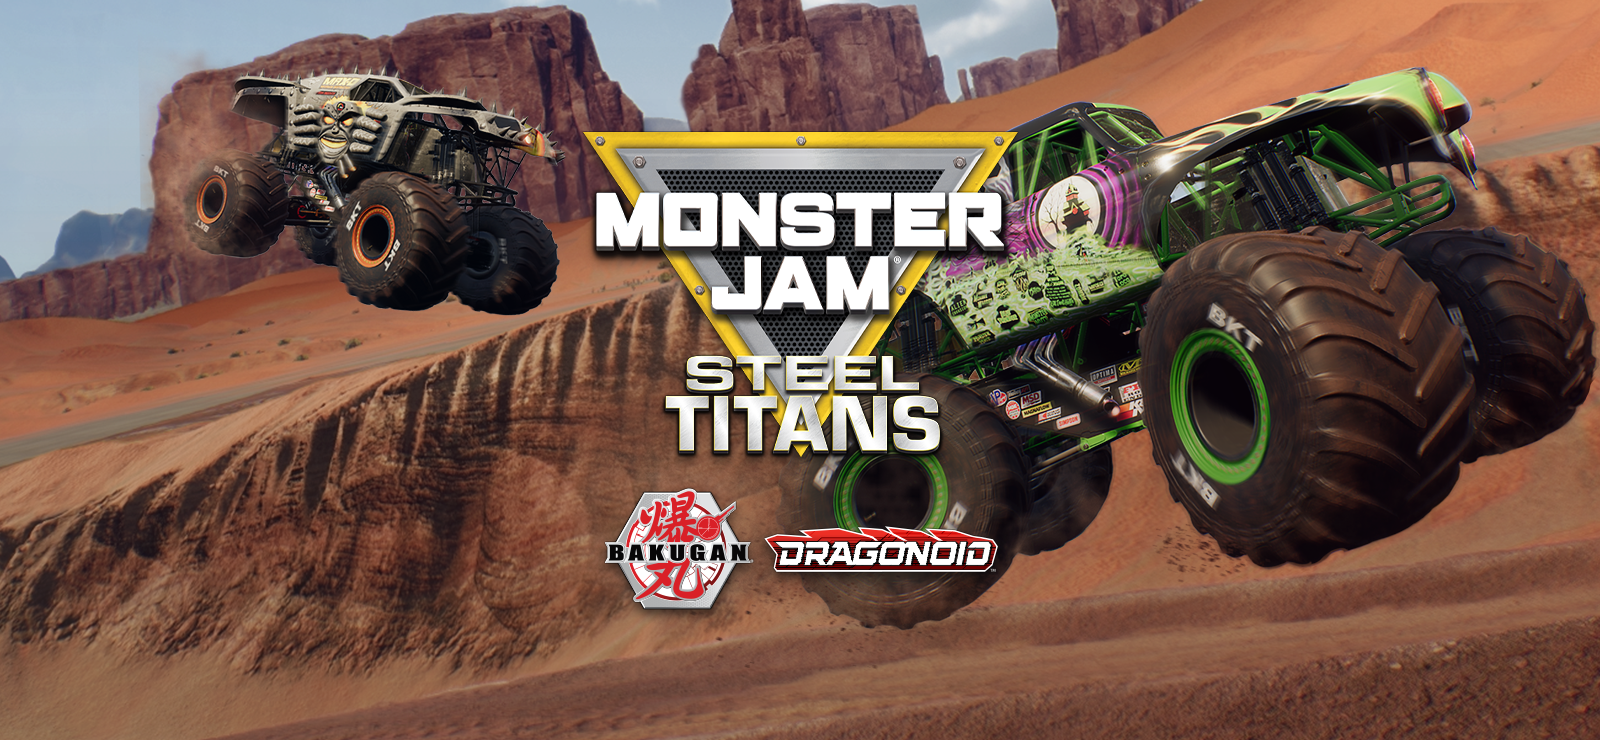 Monster Jam Steel Titans - Bakugan Dragonoid Truck